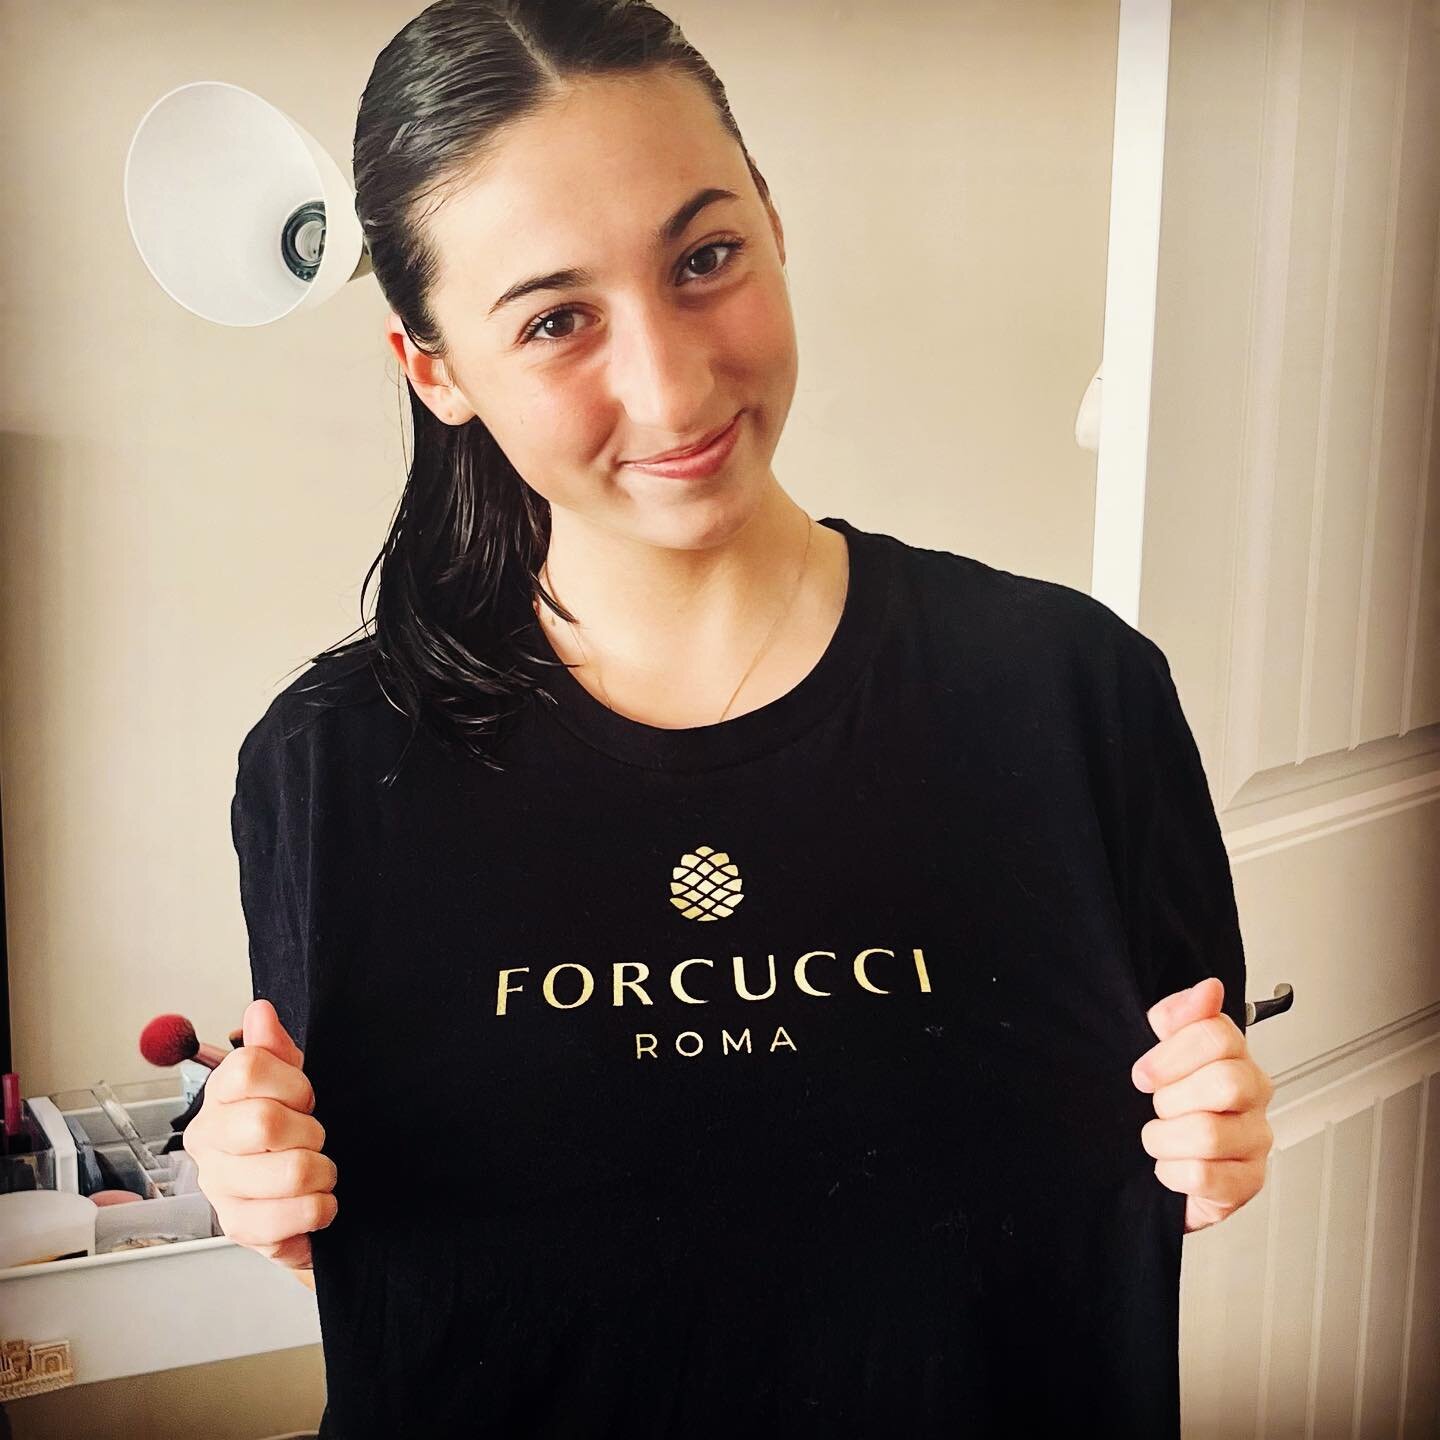 @edenschaflander rocking the Forcucci original pigna logo tee over the weekend. Looks great on you. 

#forcucci #gasouthern #gasouthernuniversity #gata #streetwear #italianbrand #undergroundbrand #supermodels